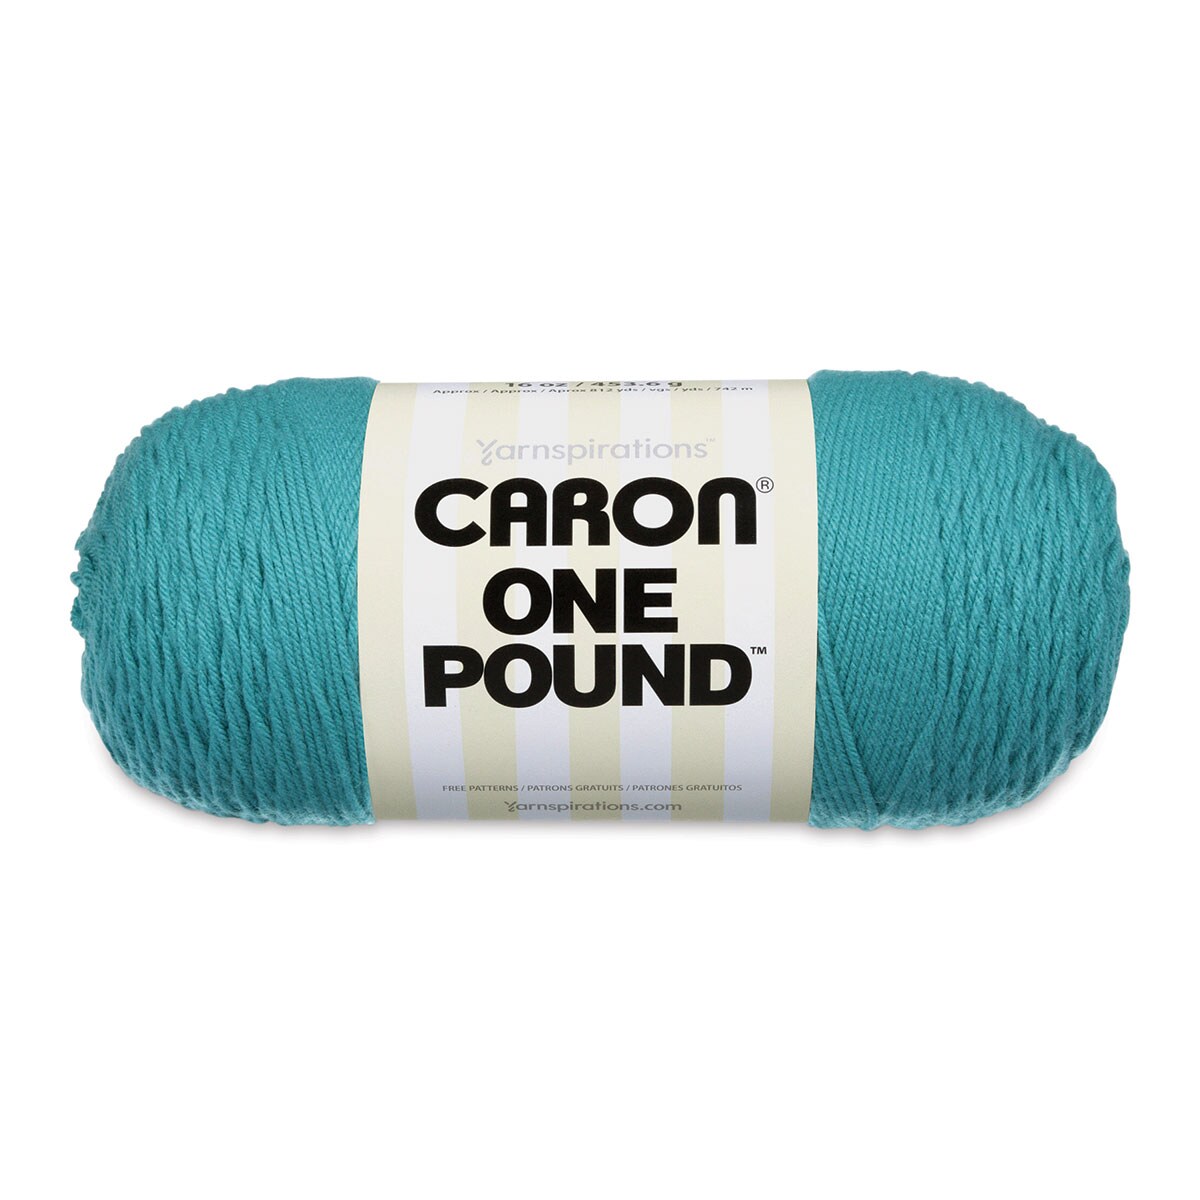 Caron One Pound Acrylic Yarn - 1 lb, 4-Ply, Sunflower